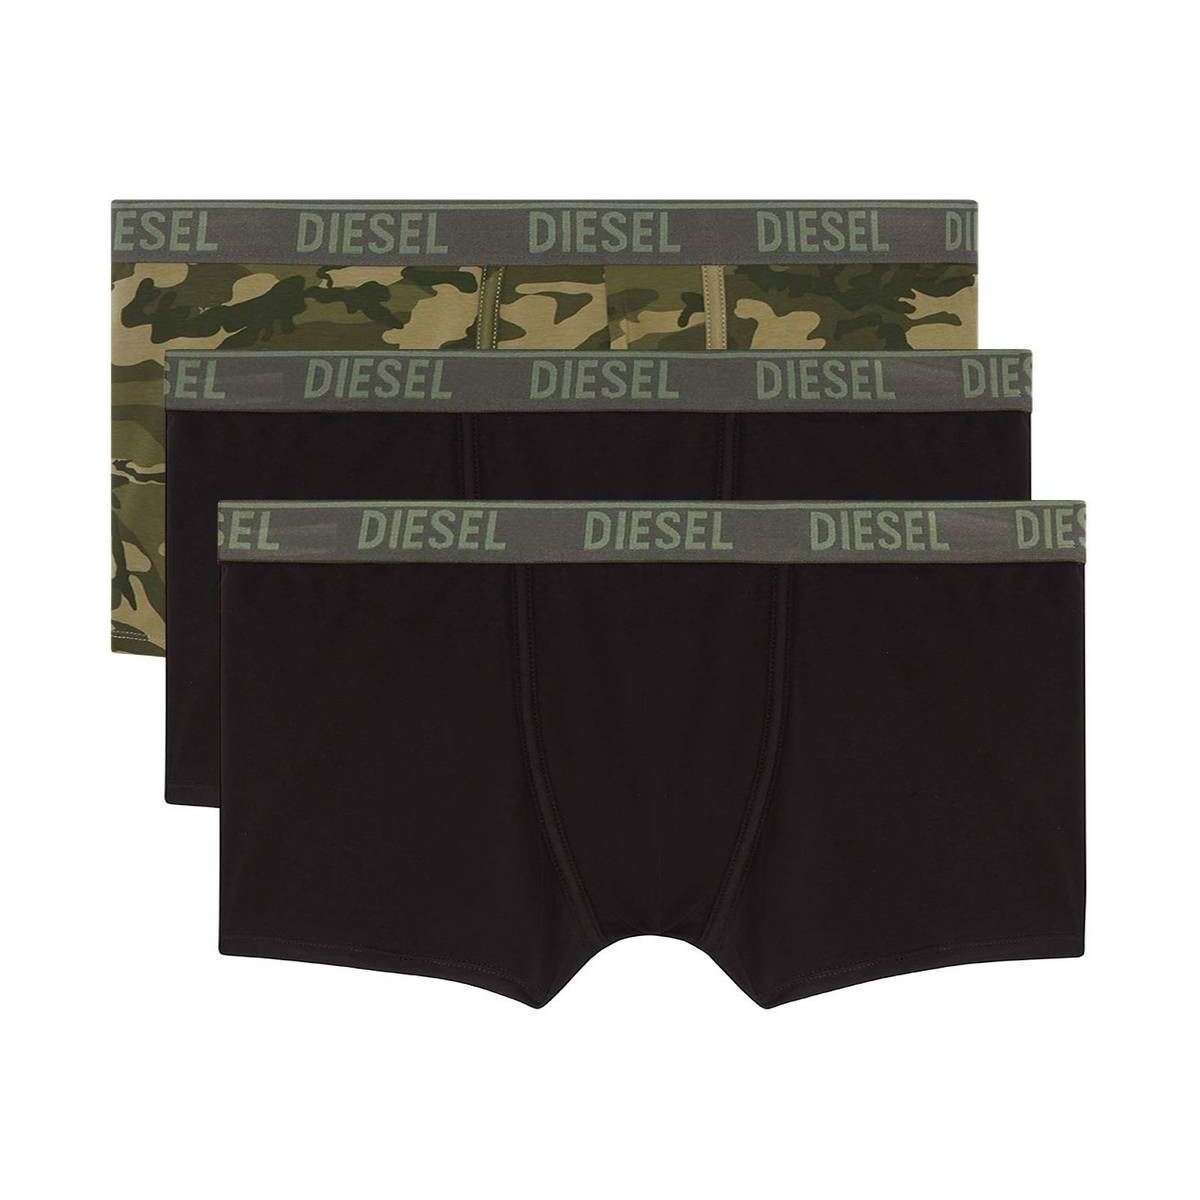 Diesel Damien 3 Pack Trunks - Black/Camo Green